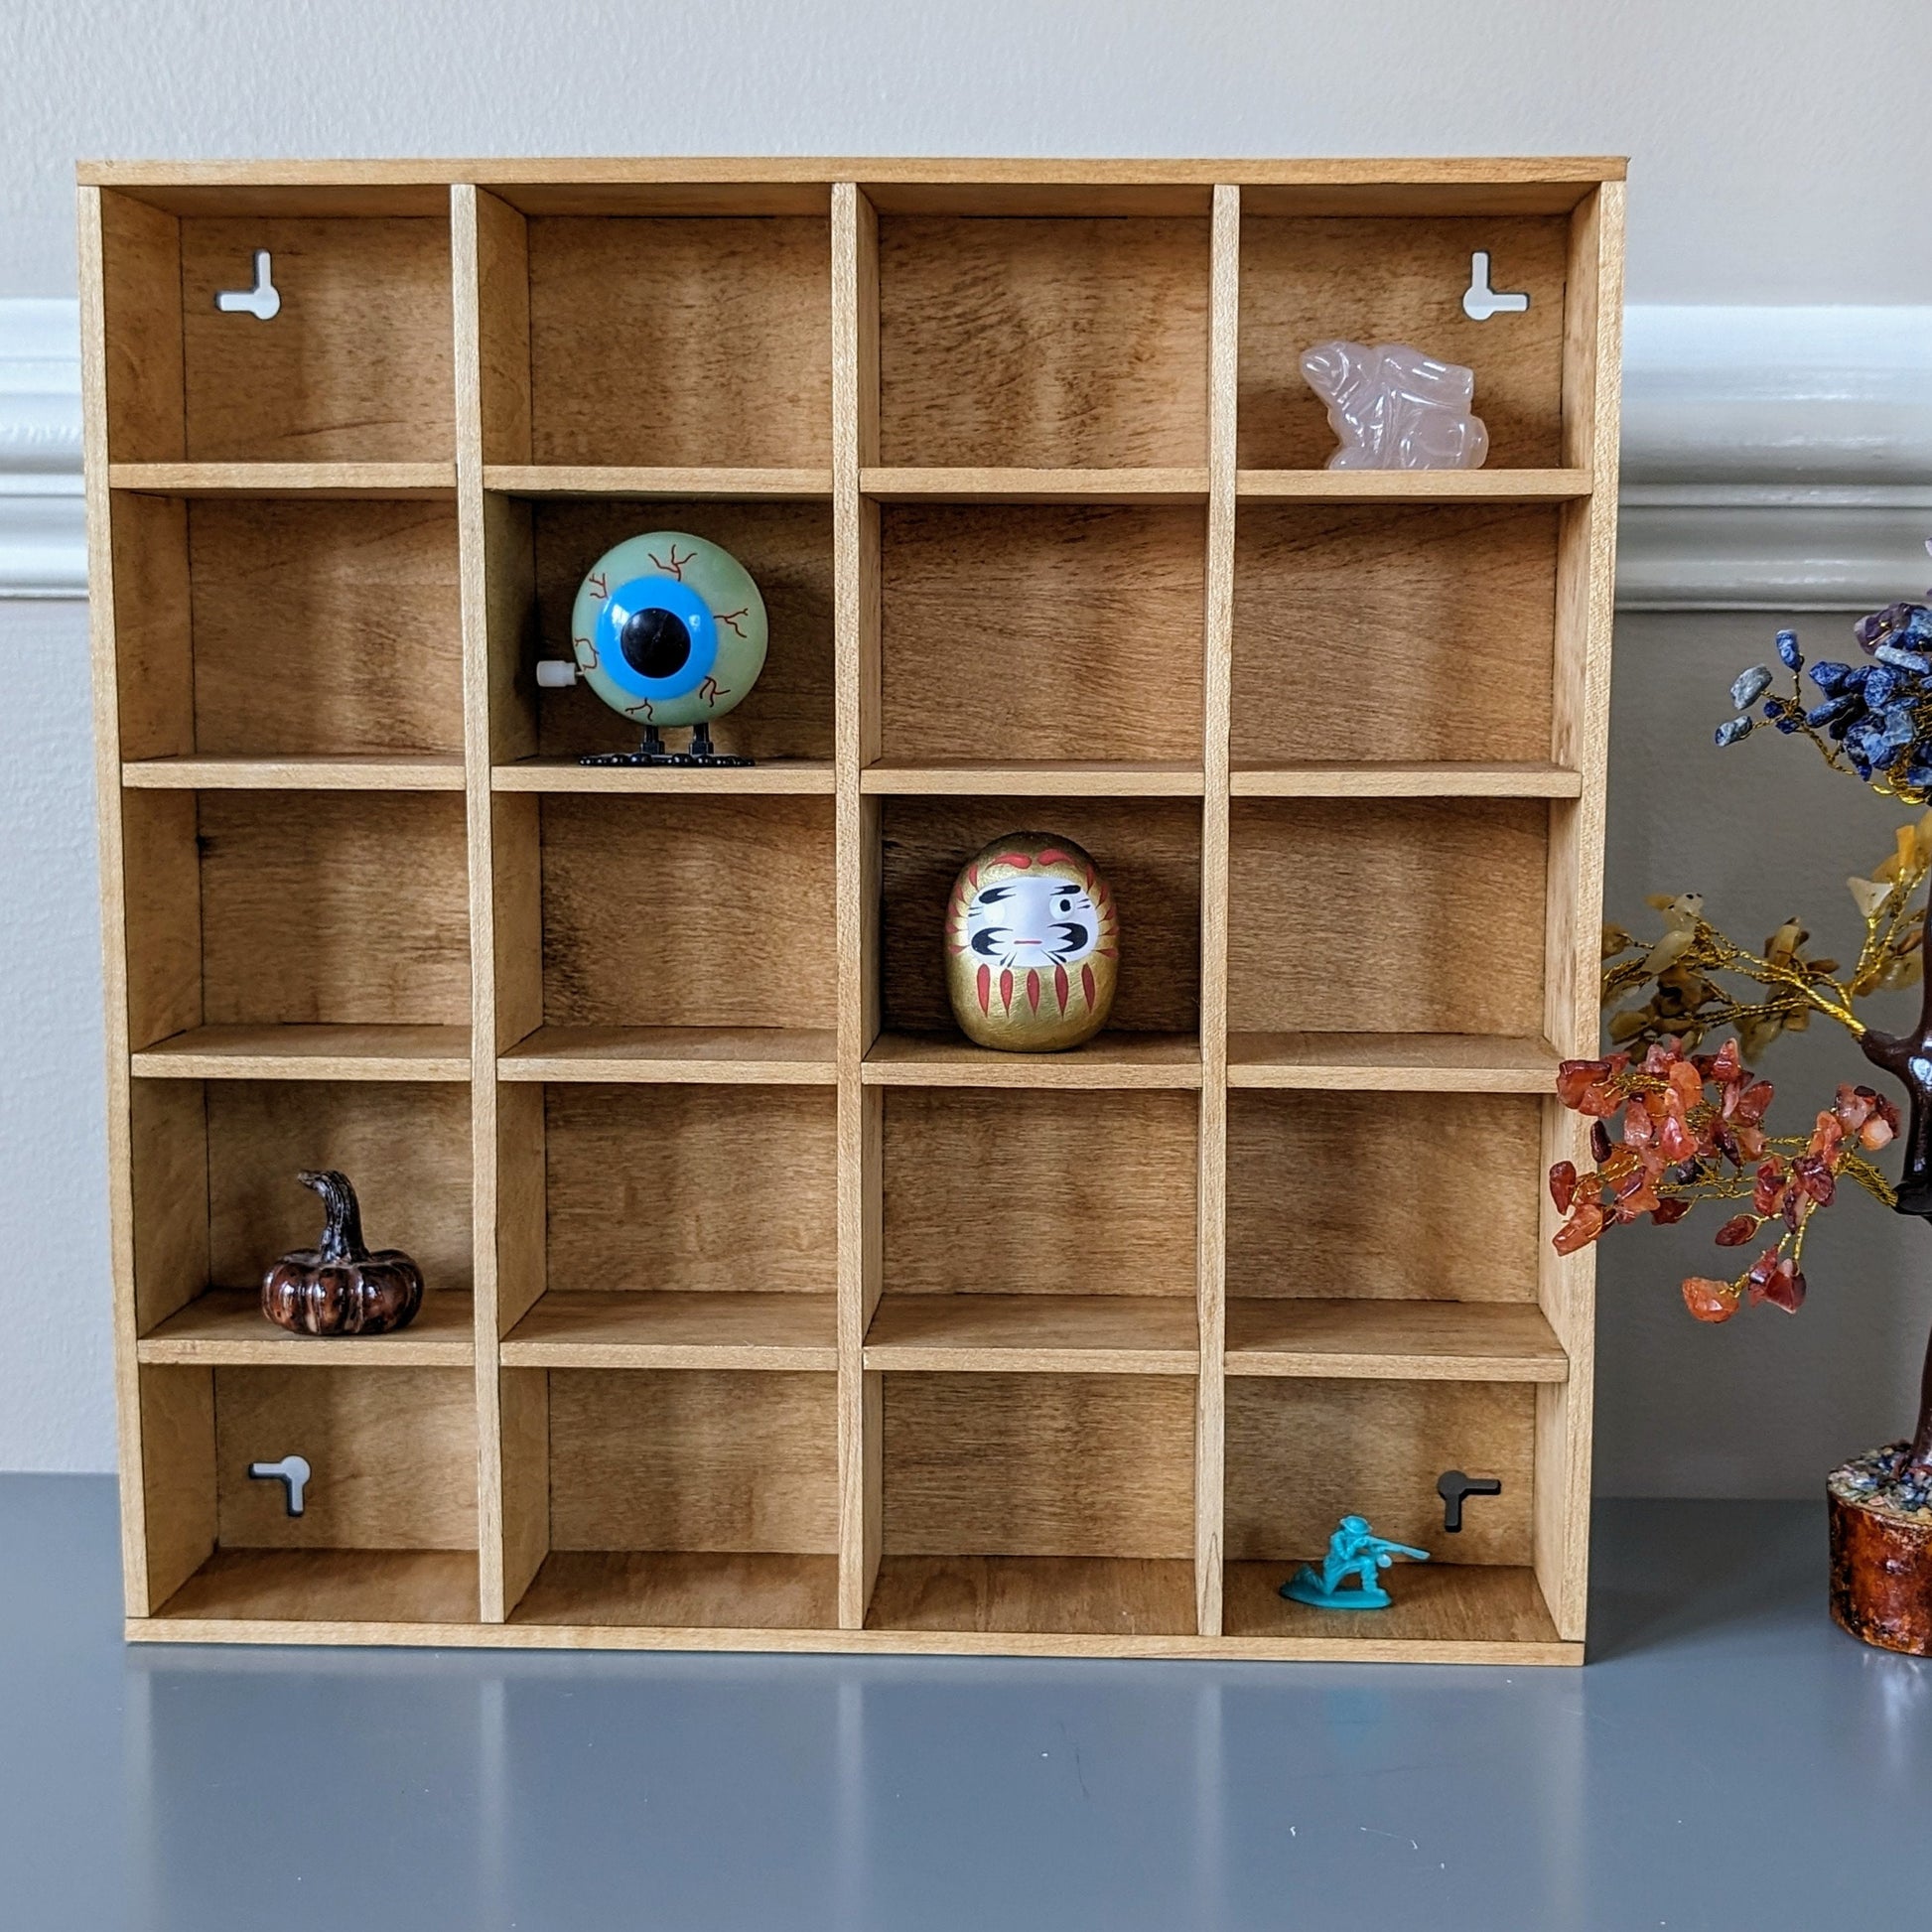 20 Compartment Wooden Display Shelf - Trinket Shelf - Curio Cabinet- Knick Knack Collection Display - Printer Tray -Figure Organizer Display